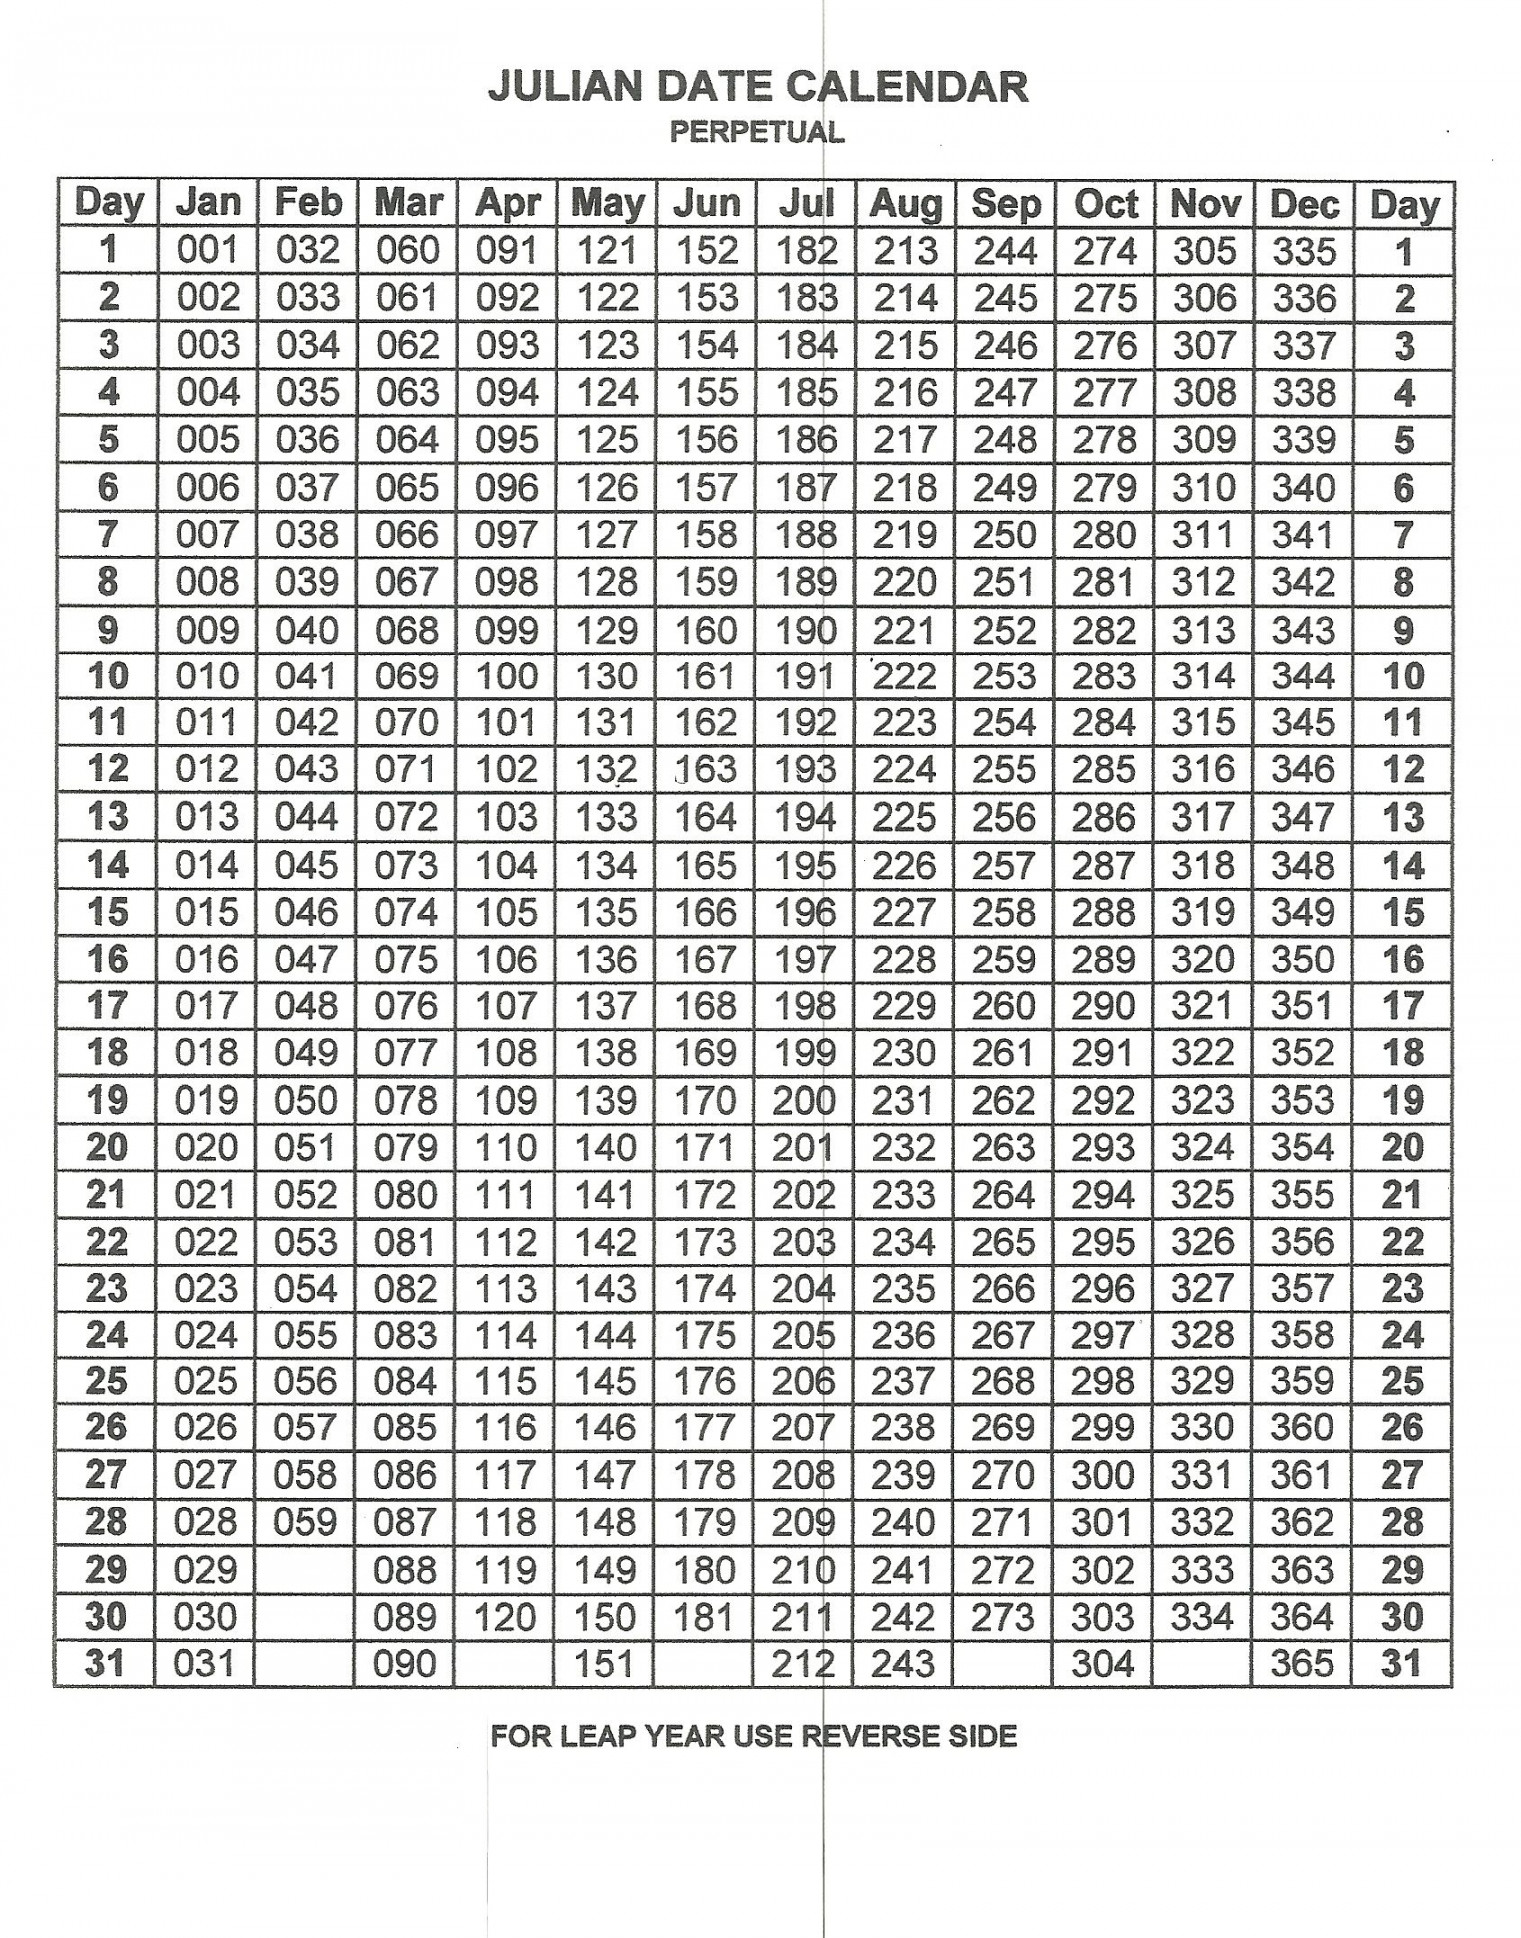 Perpetual Julian Date Calendar Calendar printables, Calendar